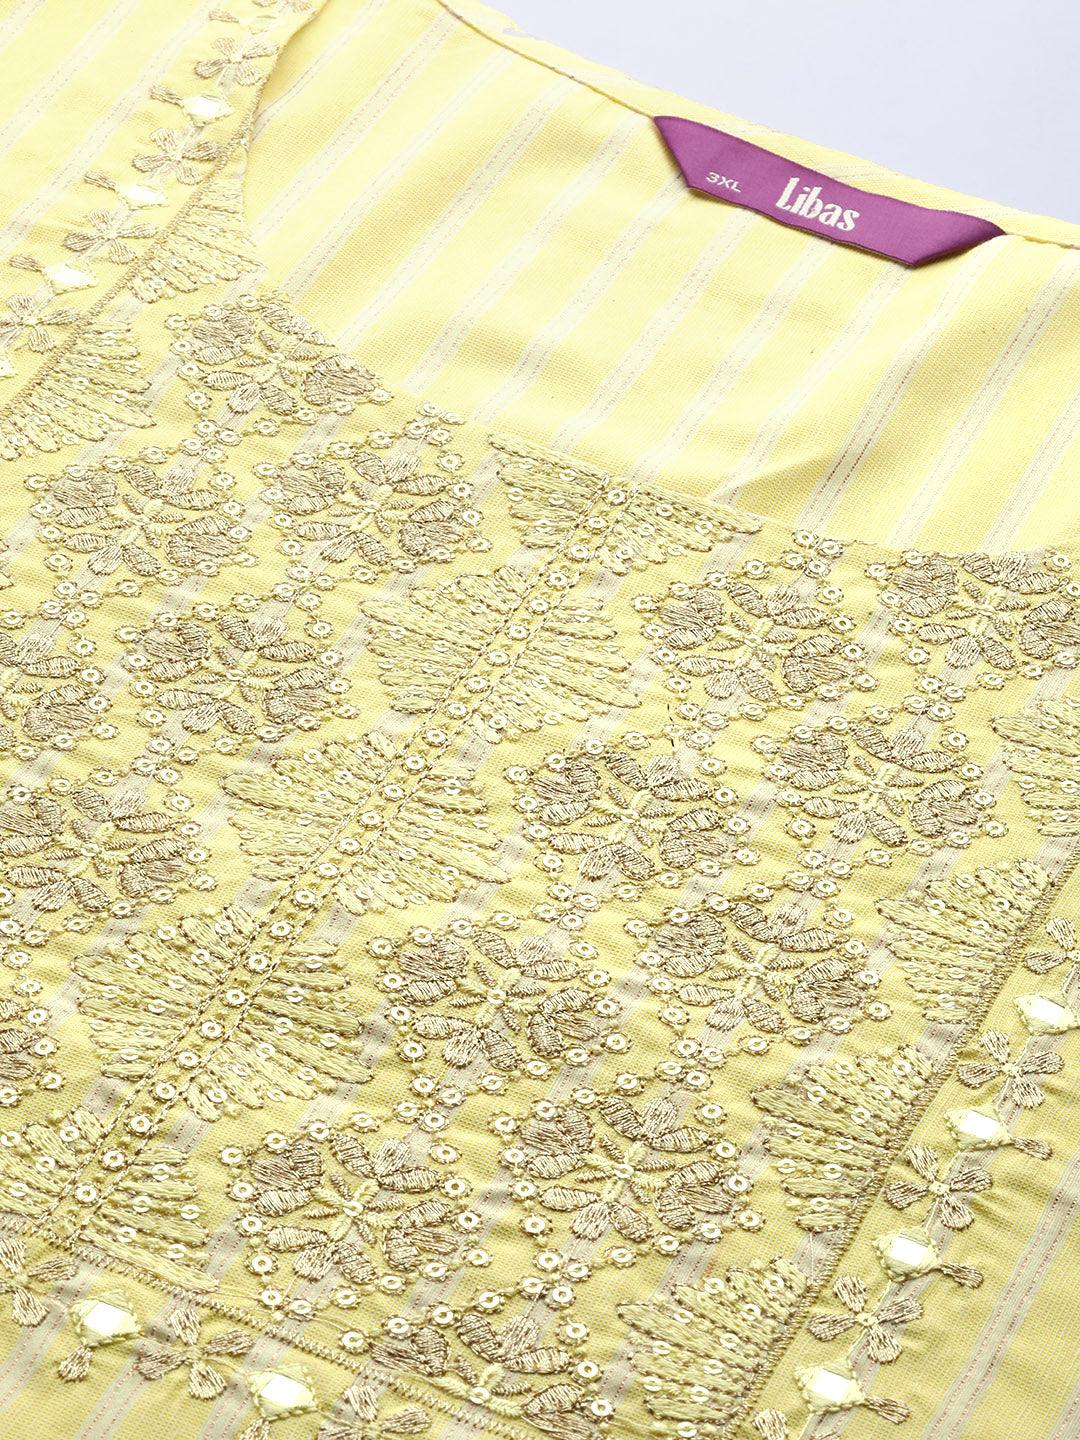 Plus Size Yellow Yoke Design Cotton Silk Kurta